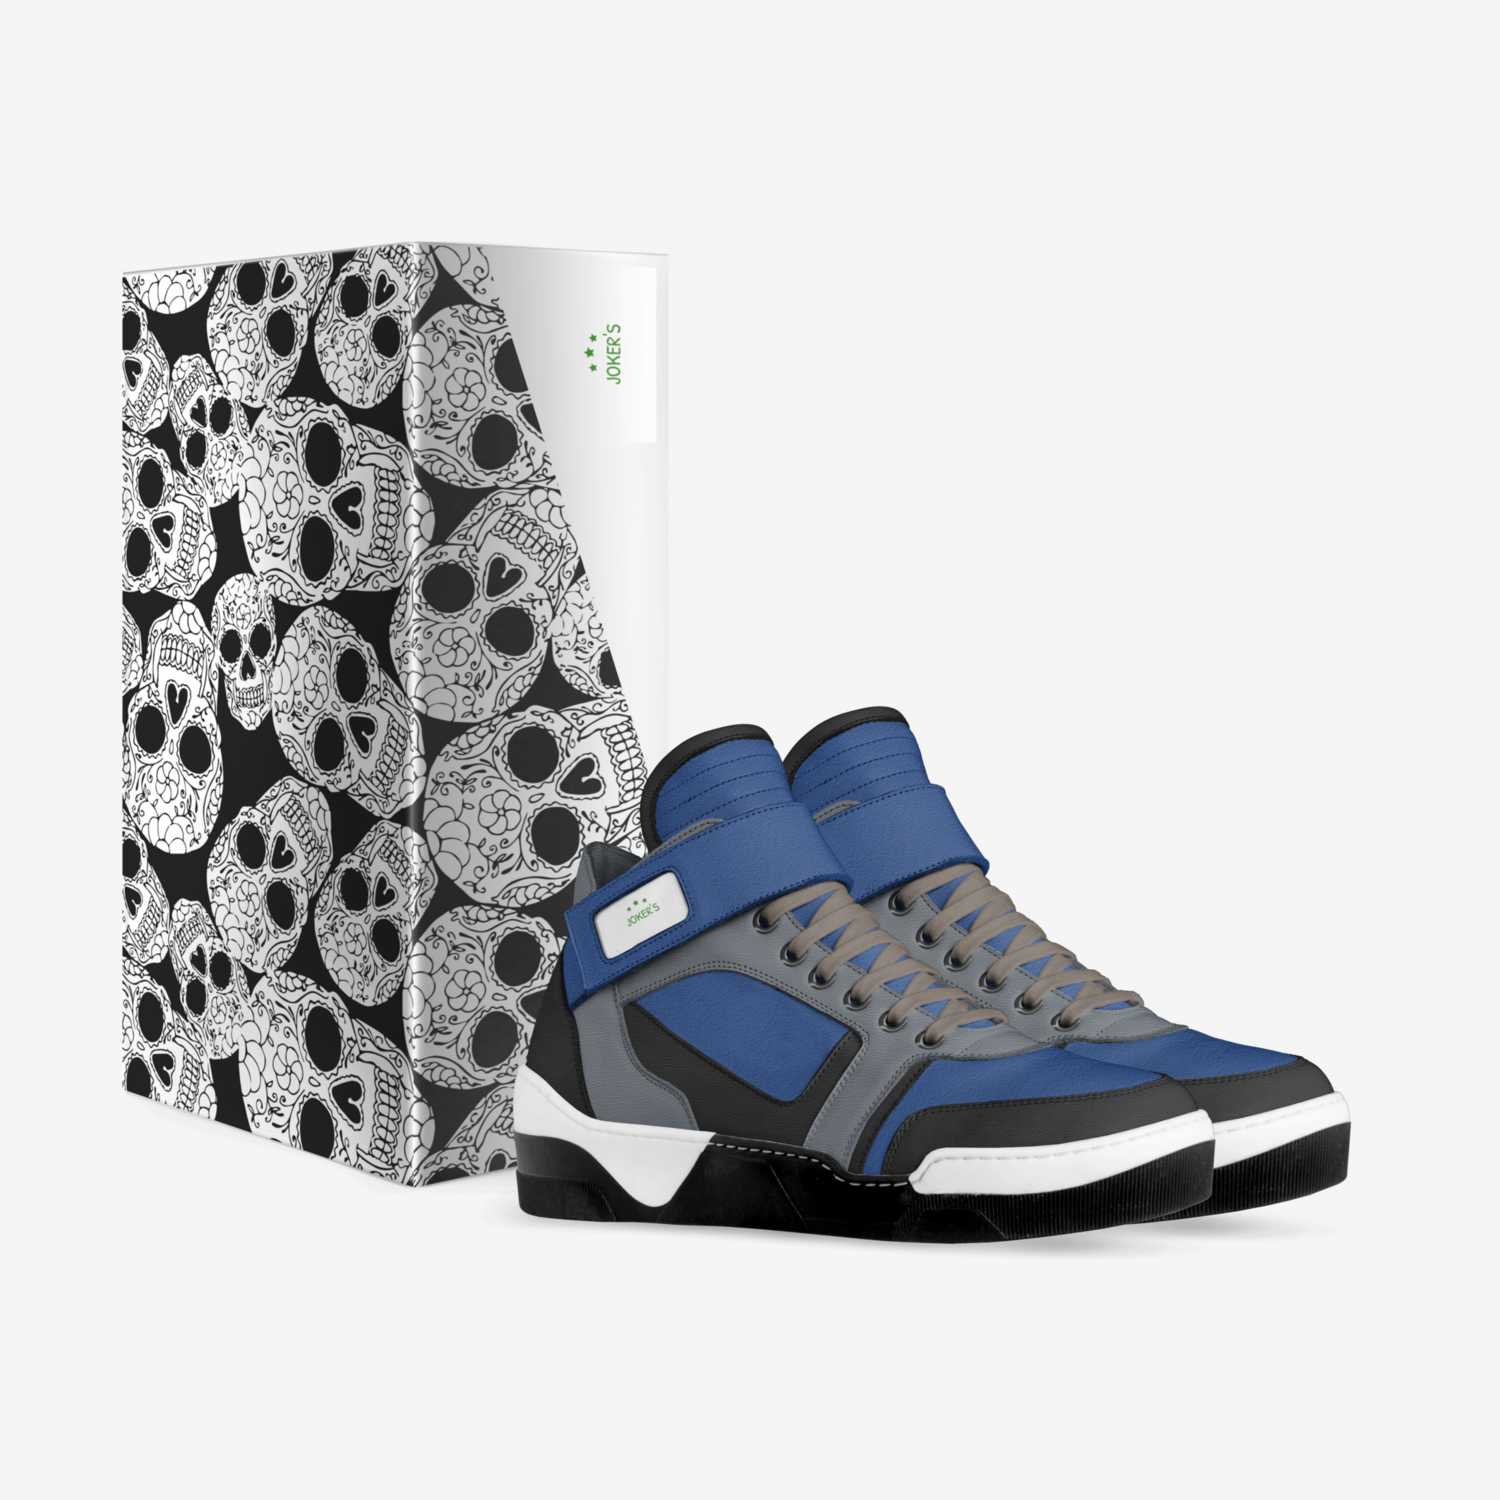 Joker's custom made in Italy shoes by Benjamin Quillen | Box view